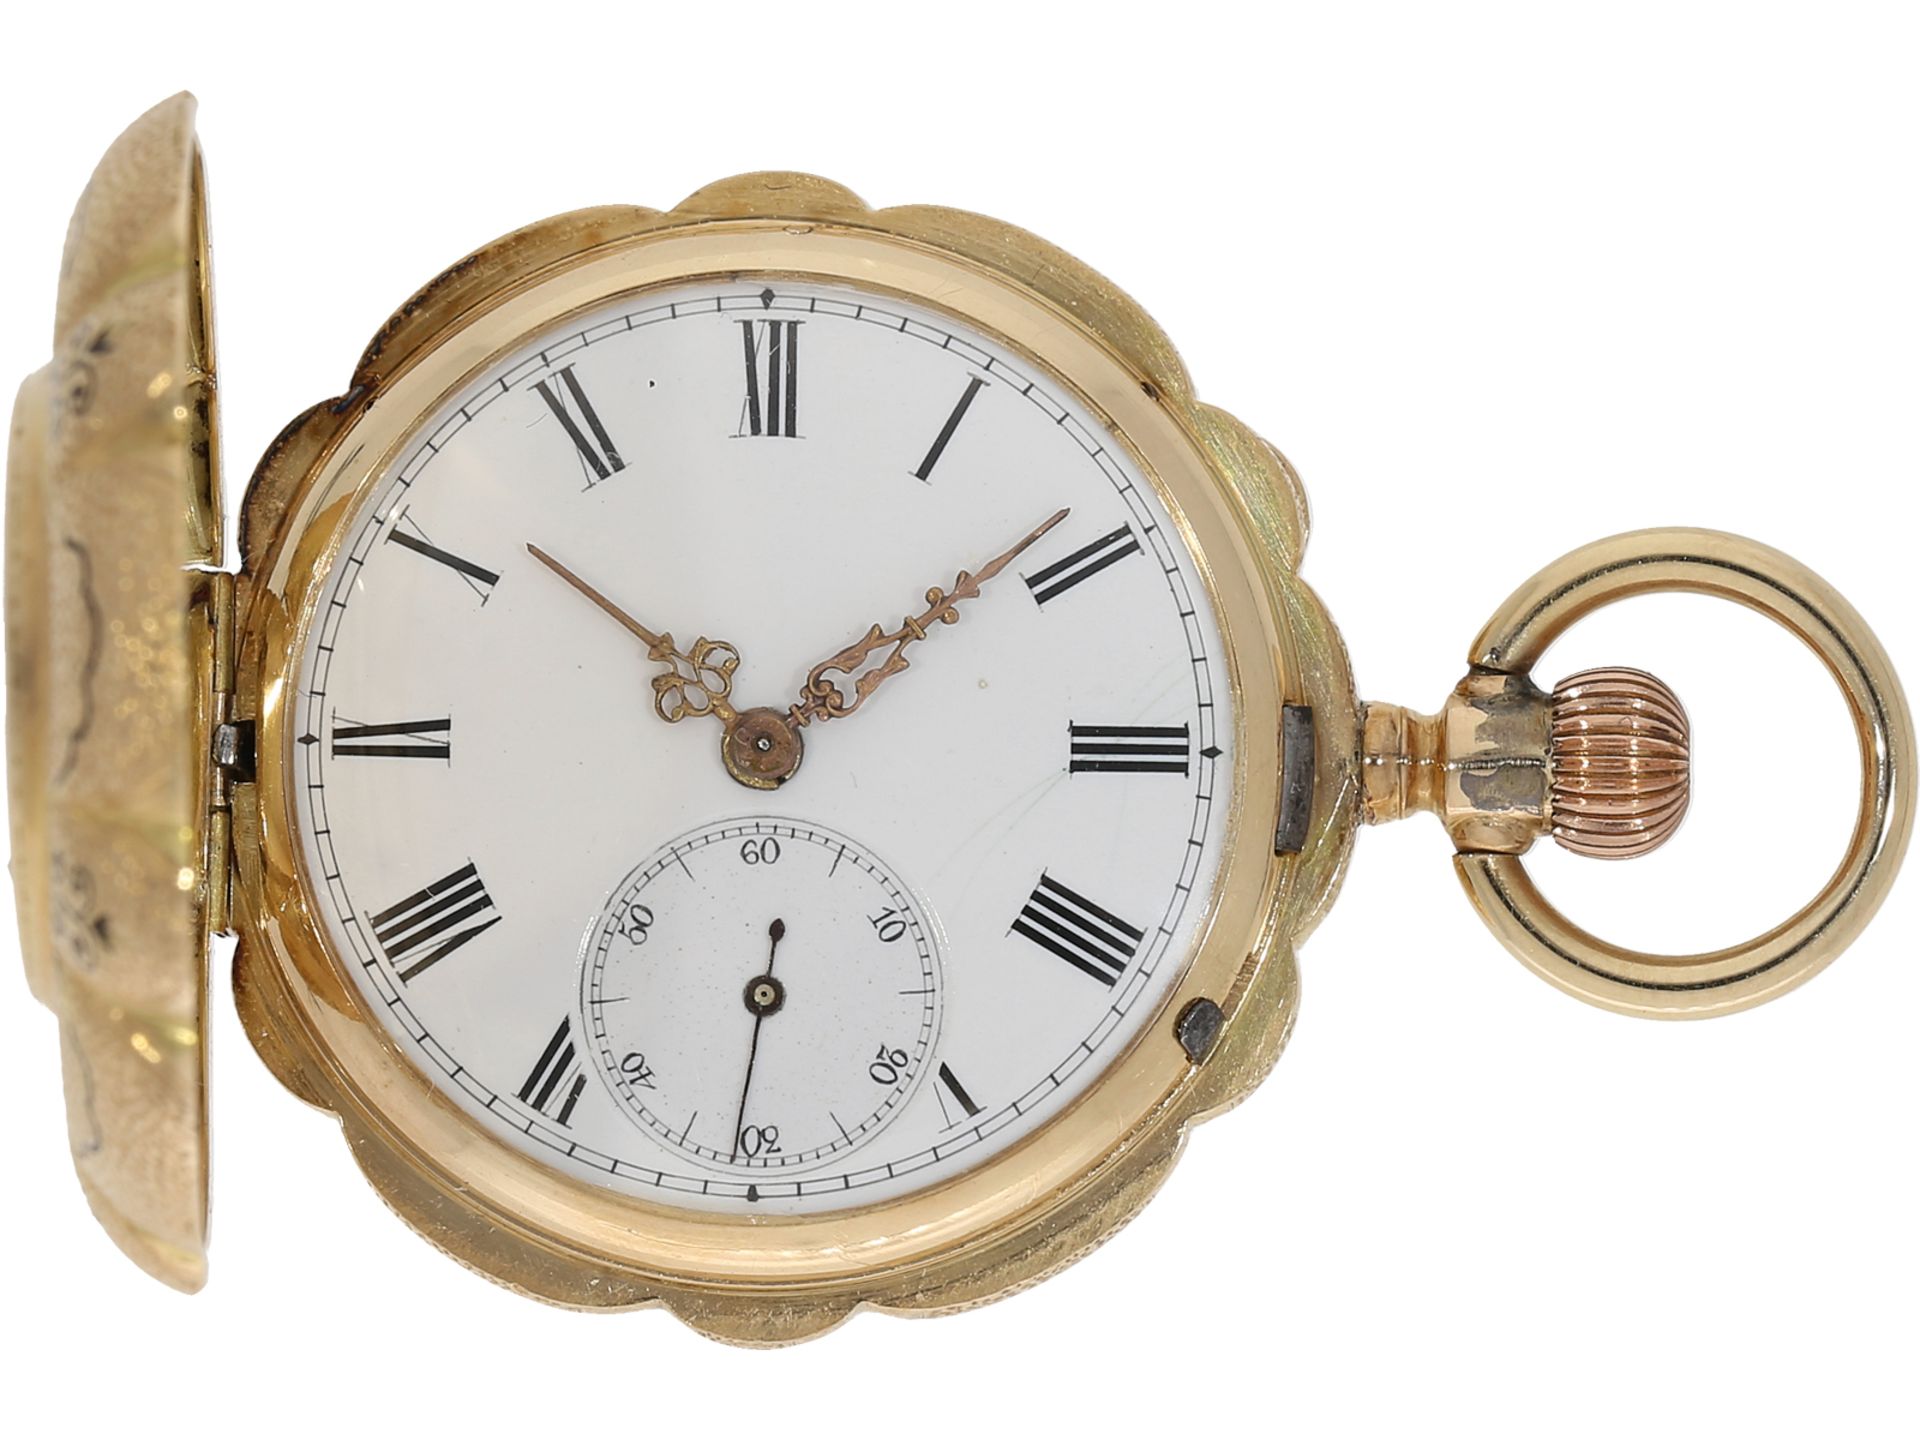 Pocket watch: gold/enamel splendour hunting case watch set with diamonds, Monard Geneve, ca. 1870 - Image 3 of 8